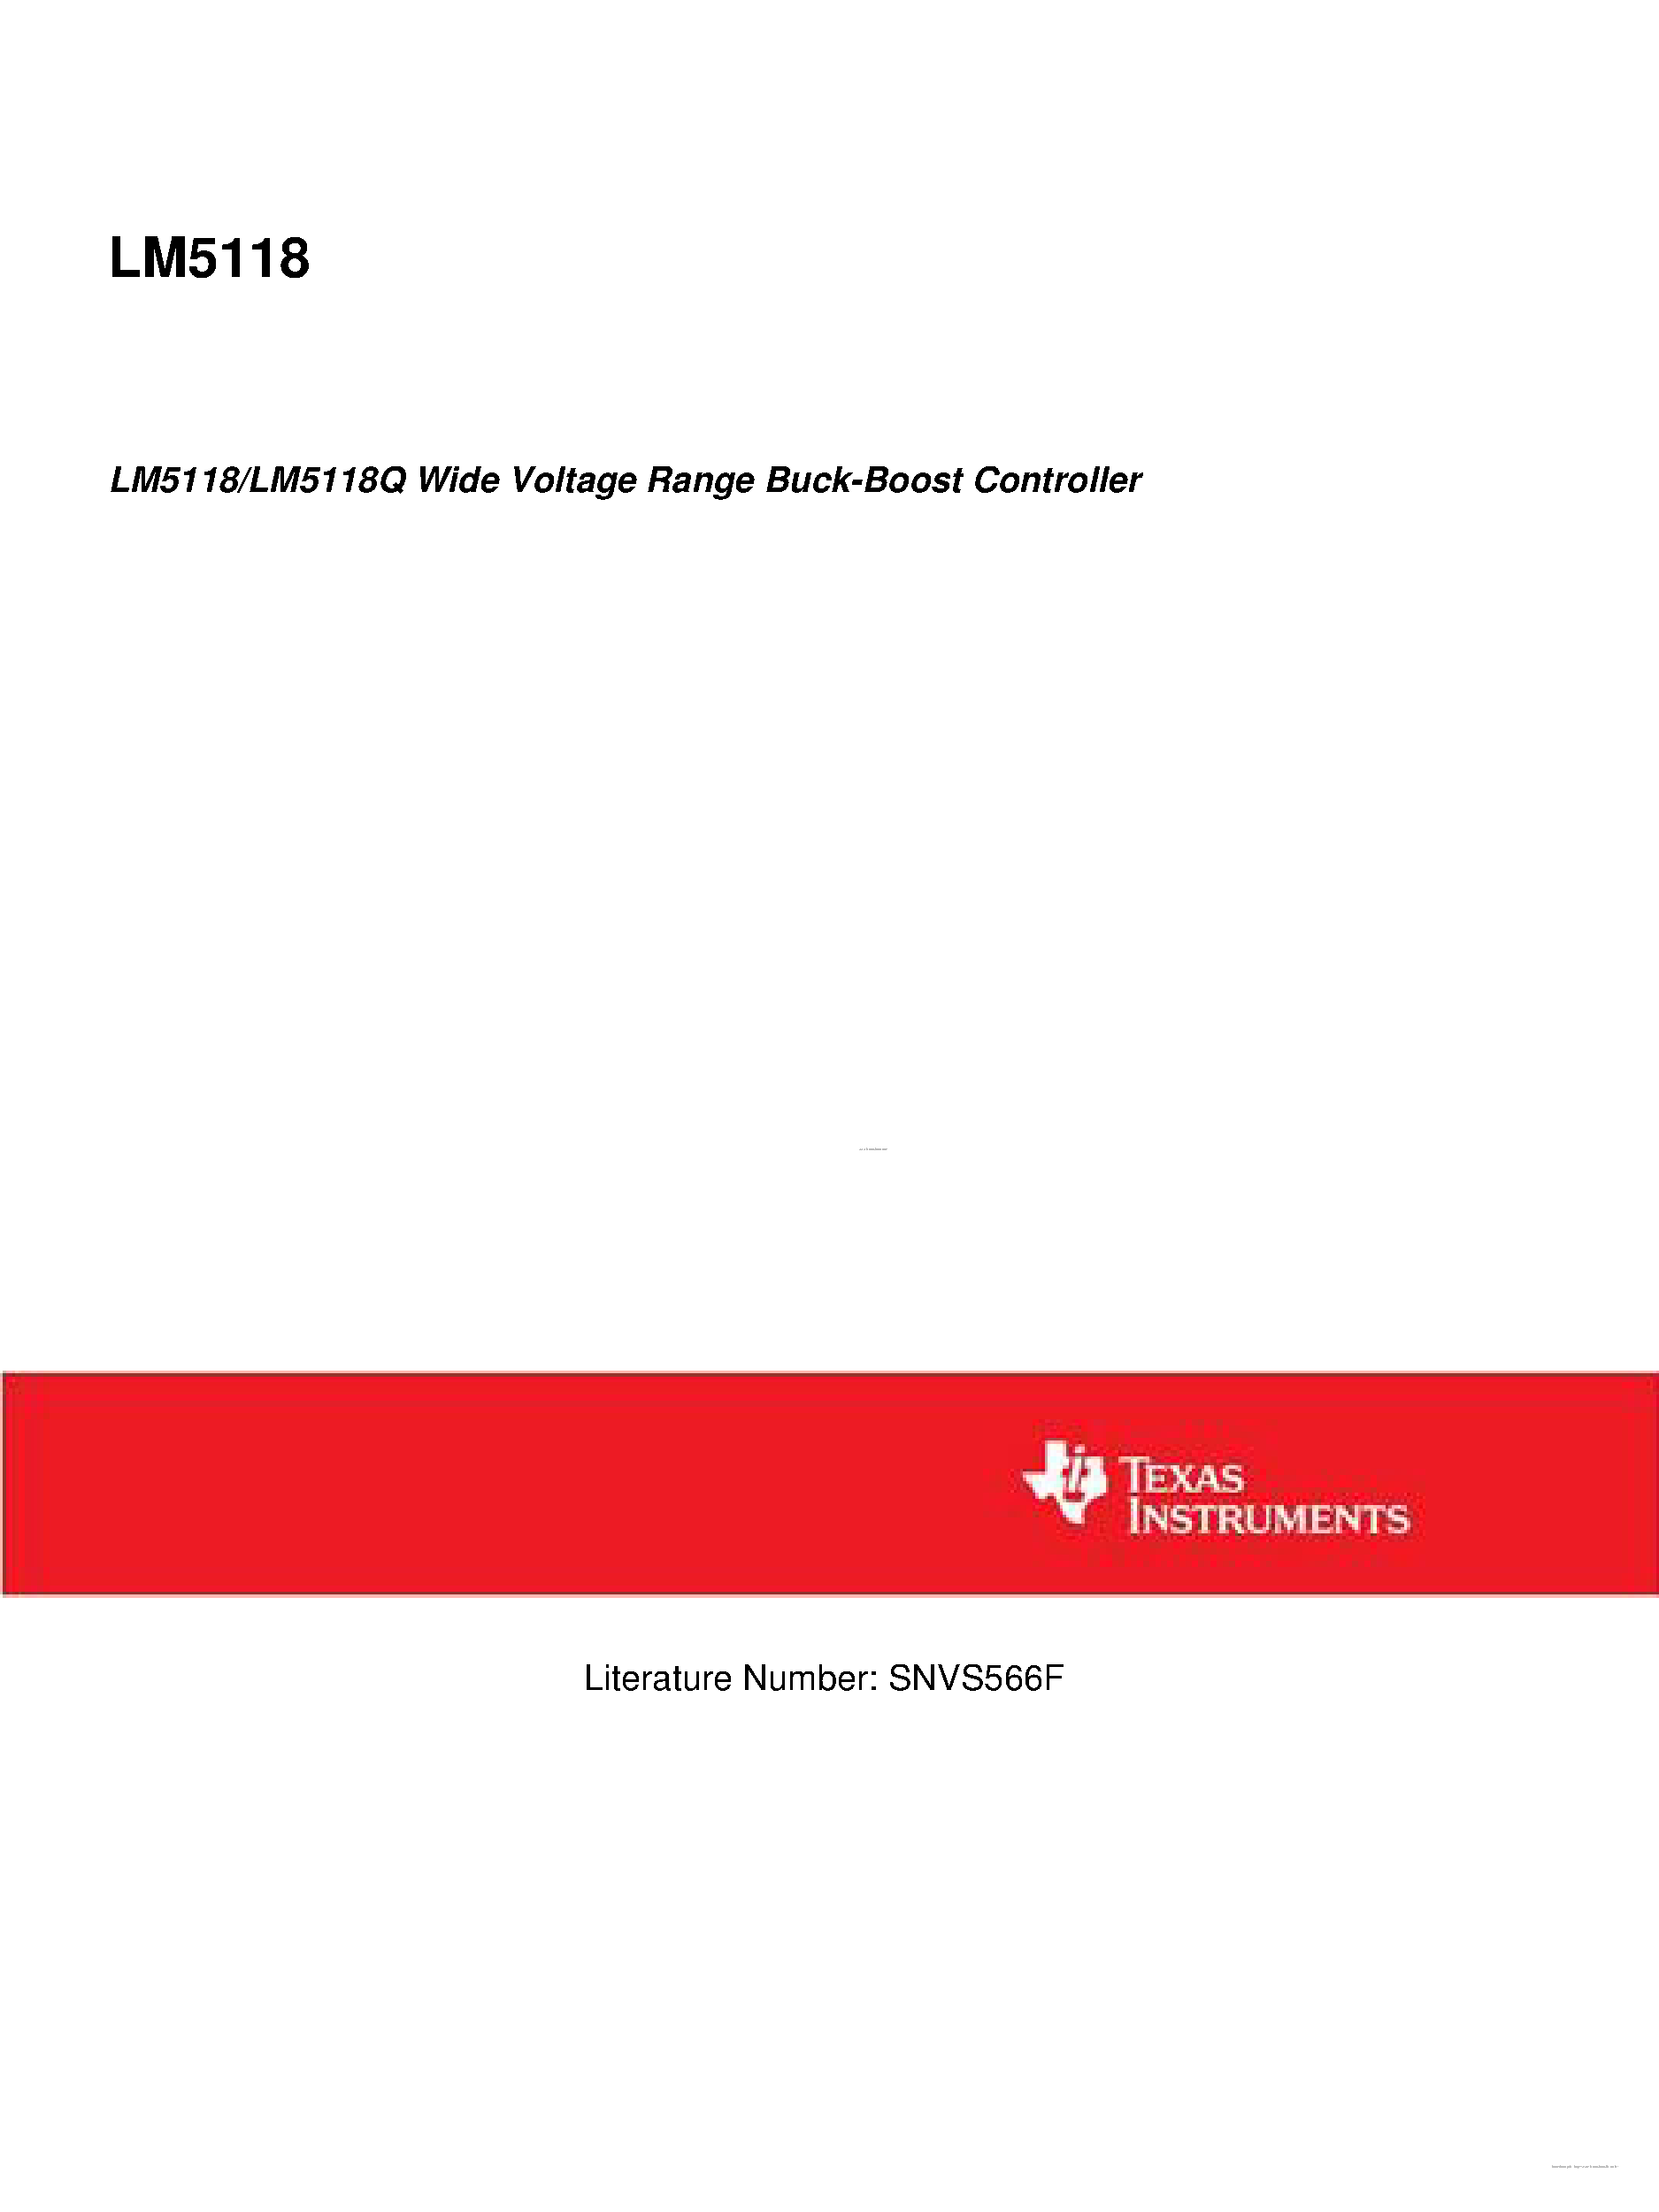 Datasheet LM5118 - Wide Voltage Range Buck-Boost Controller page 1